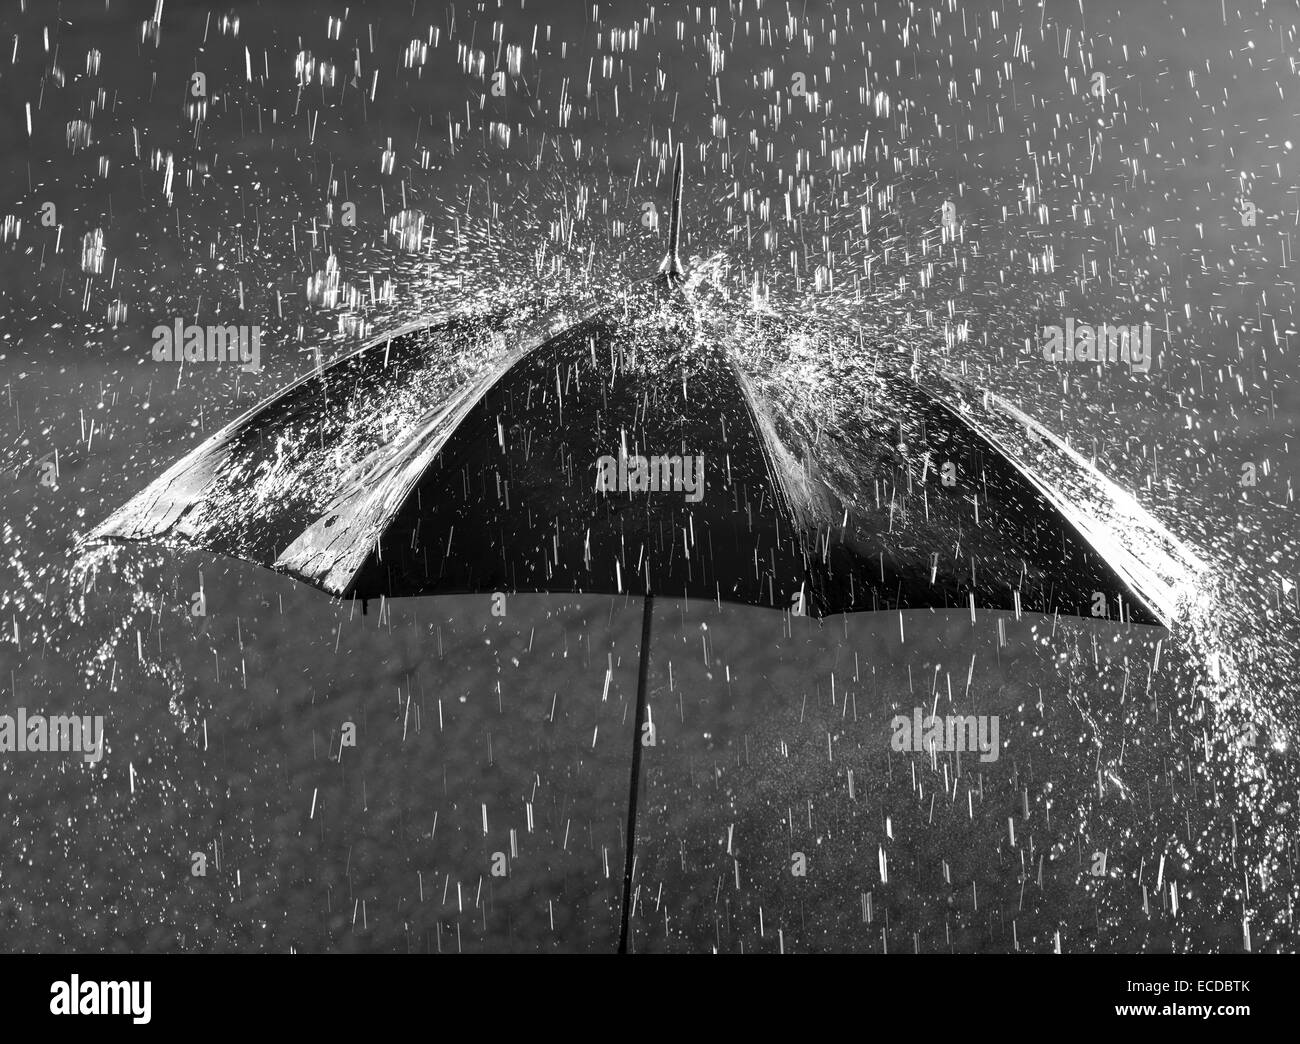 Black and white photo of umbrella in heavy rain Stock Photo